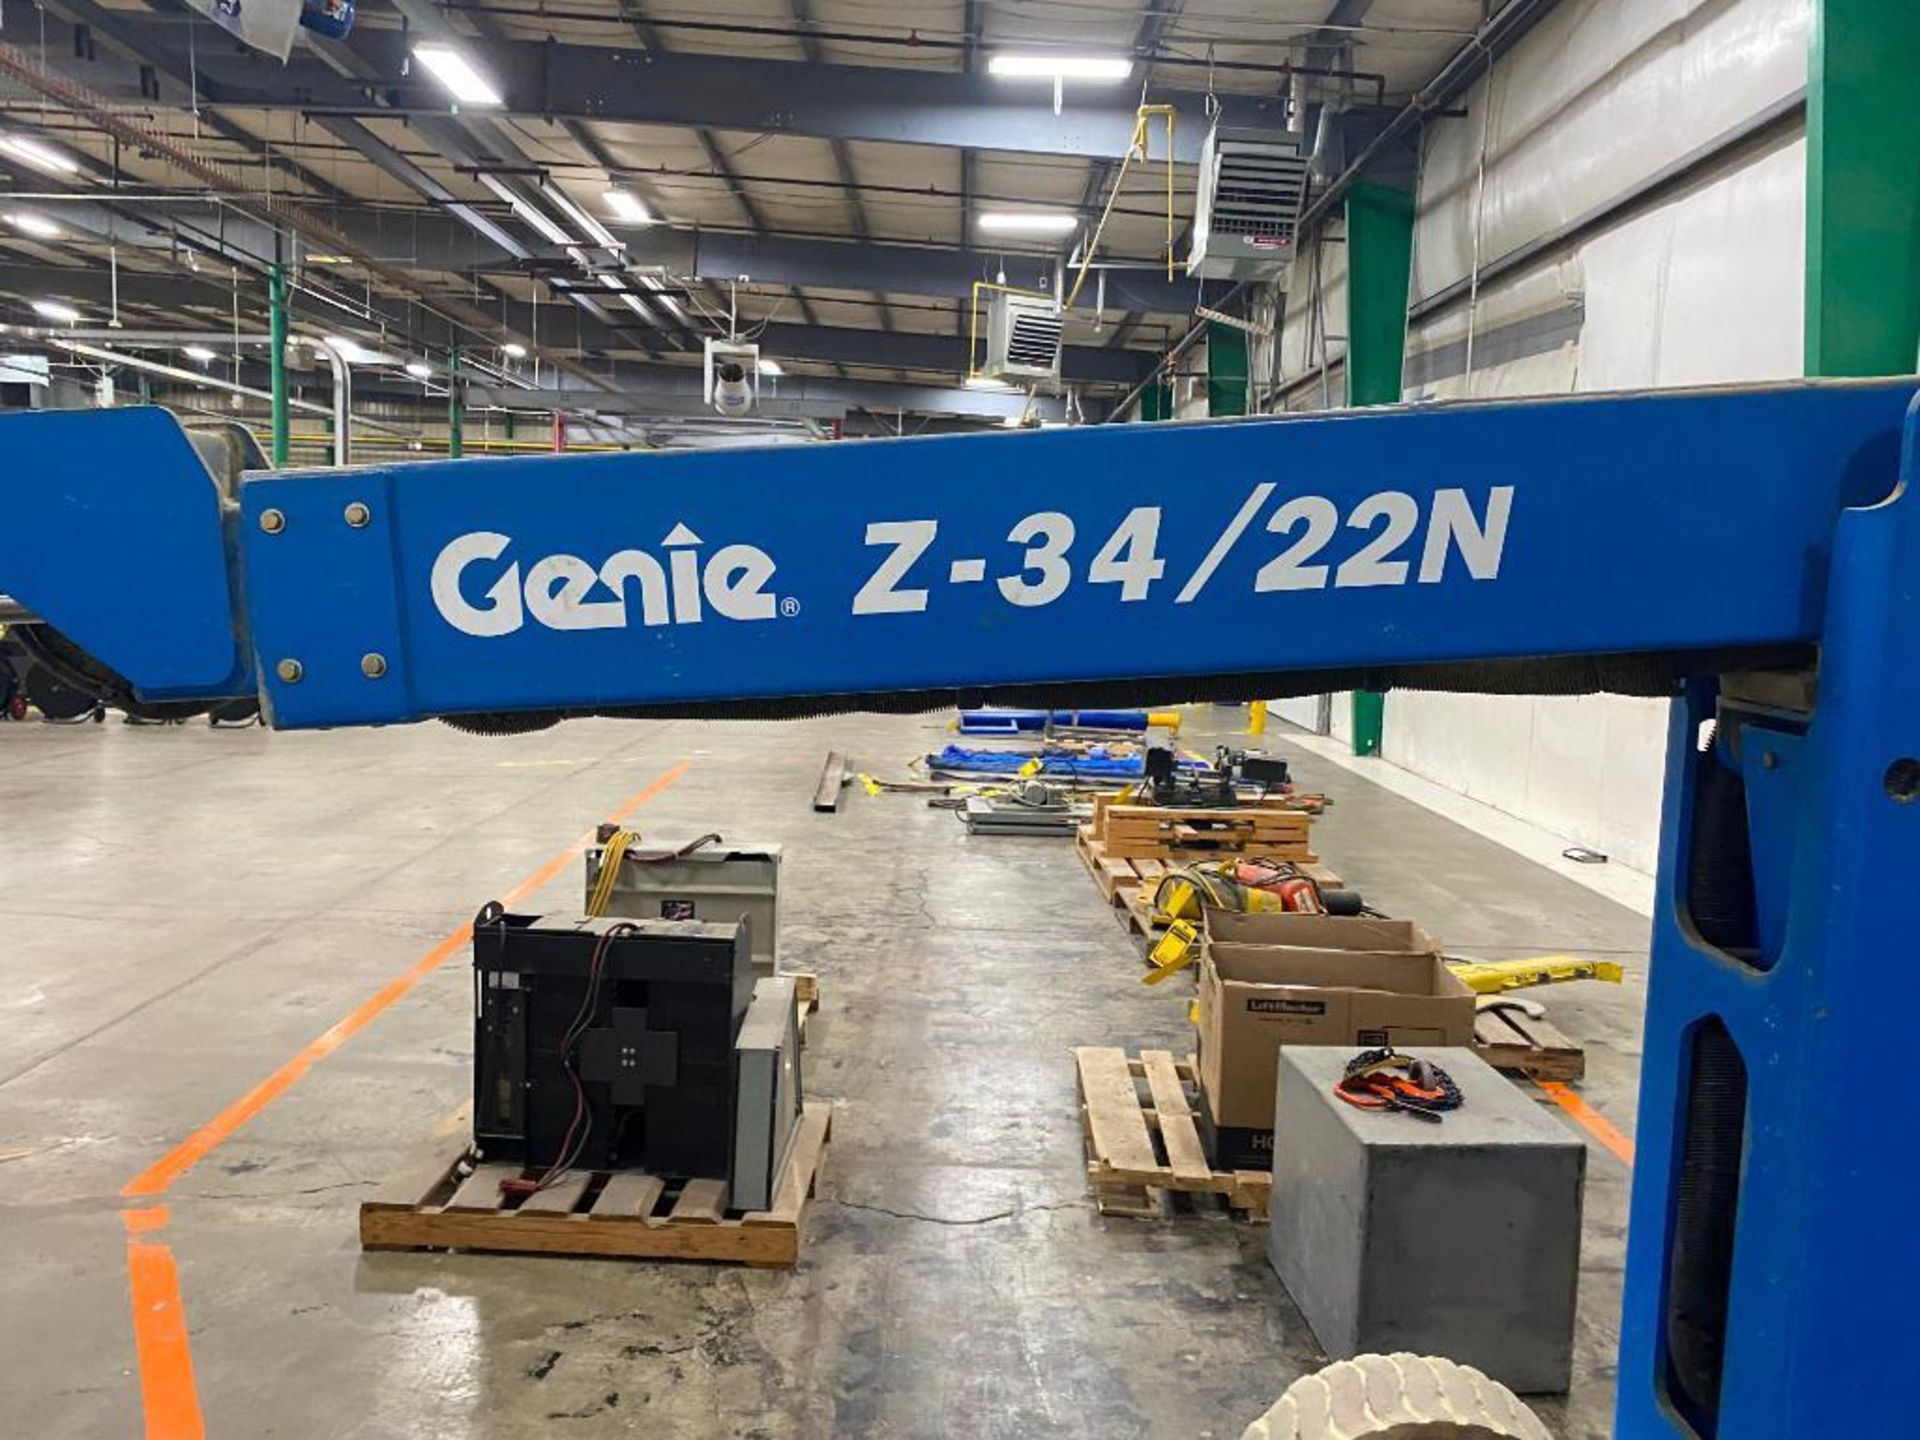 Genie Z-34/22N Boom Lift, 500 LB. Cap., Rotating Basket, 27" x 54", 24 V, 701 Hours - Image 3 of 5